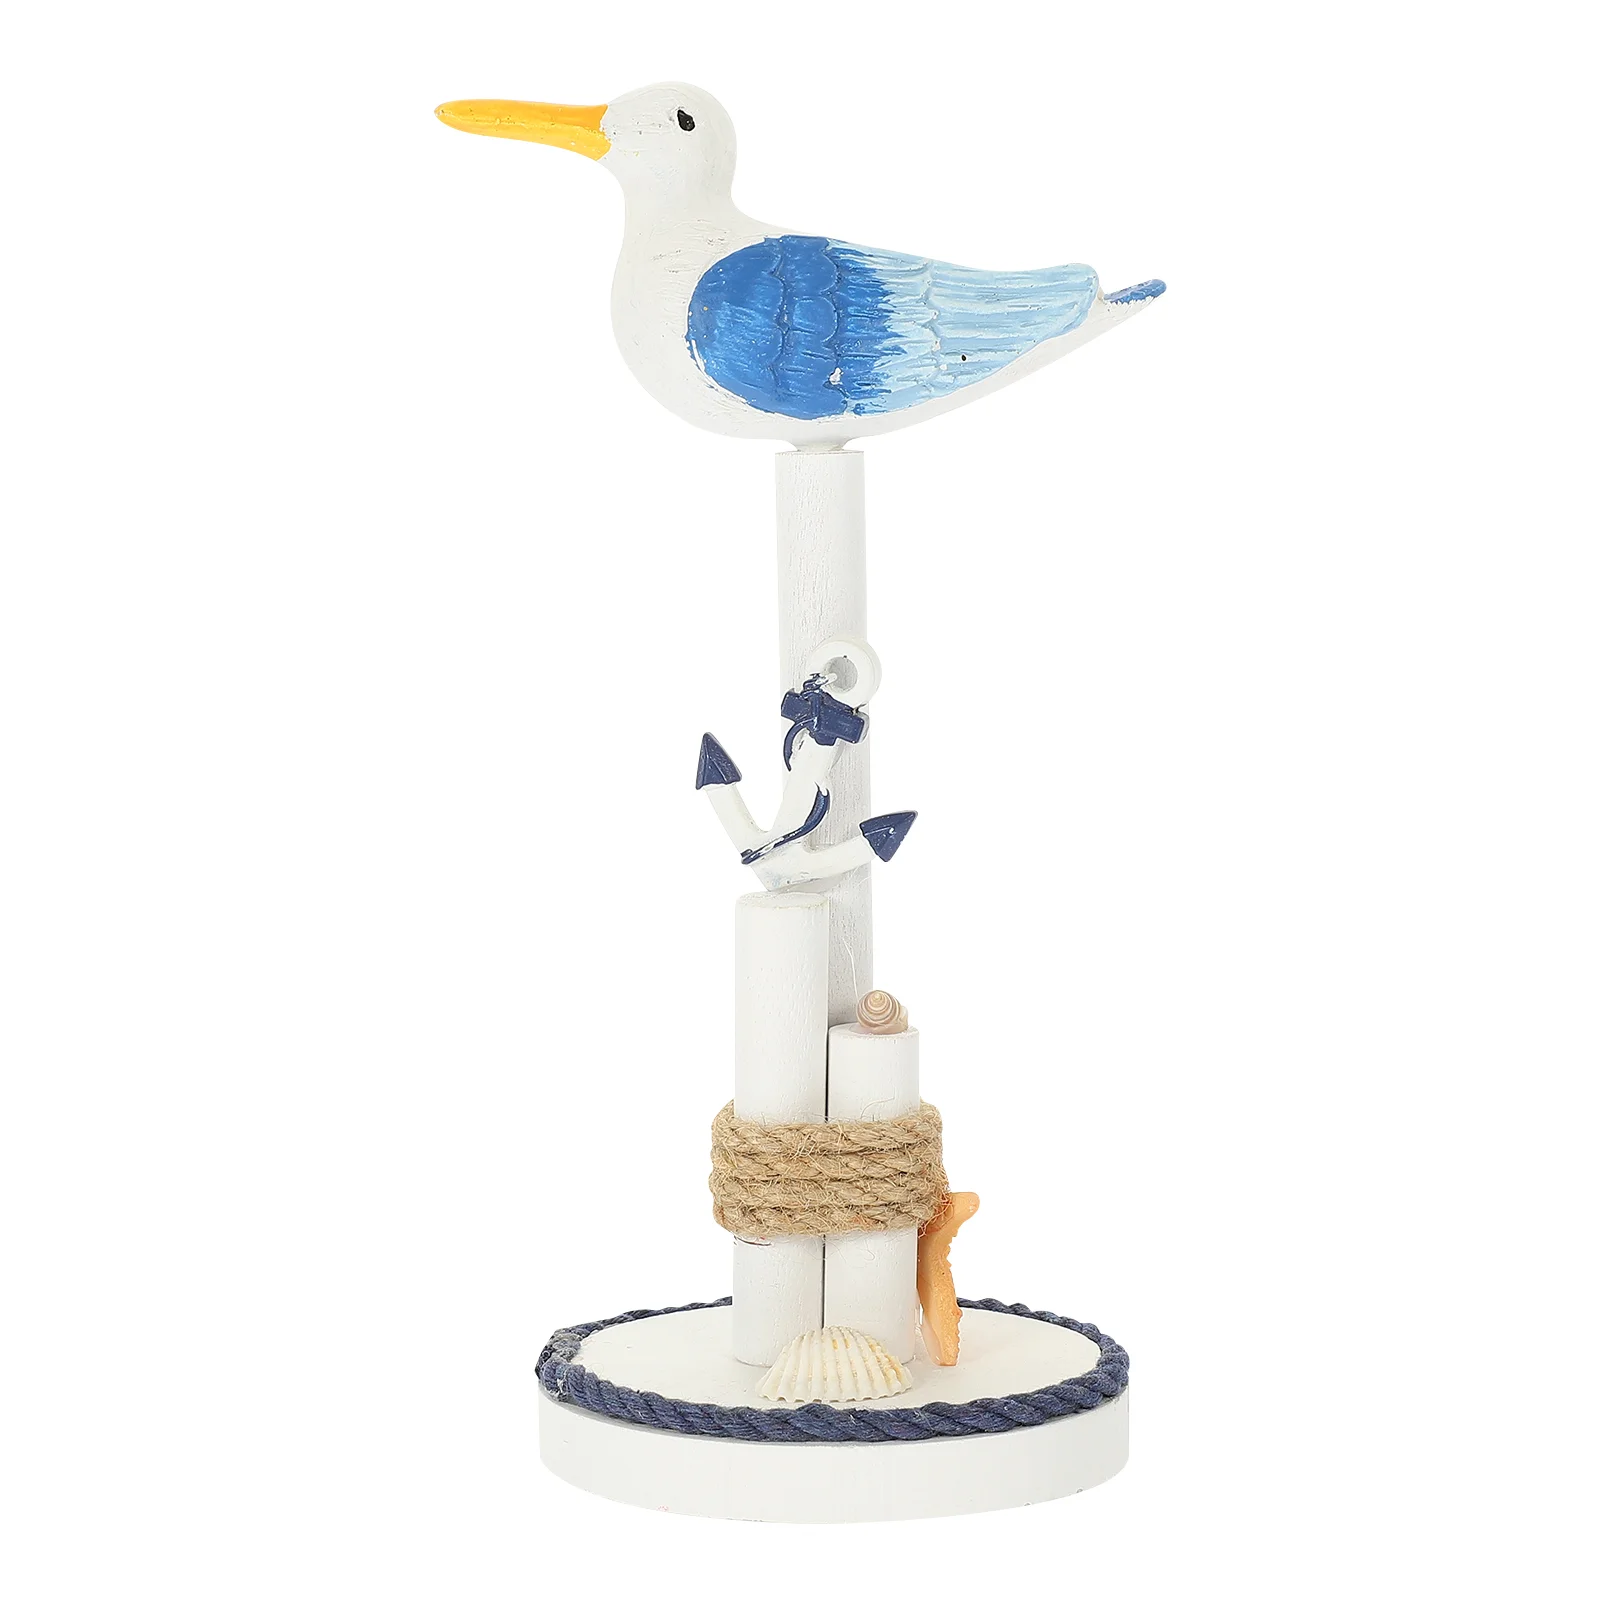 

Seagull Bird Nautical Statue Figurine Coastal Figurines Decor Wooden Wood Beach Sculpture Ornament Garden Table Ornaments Birds